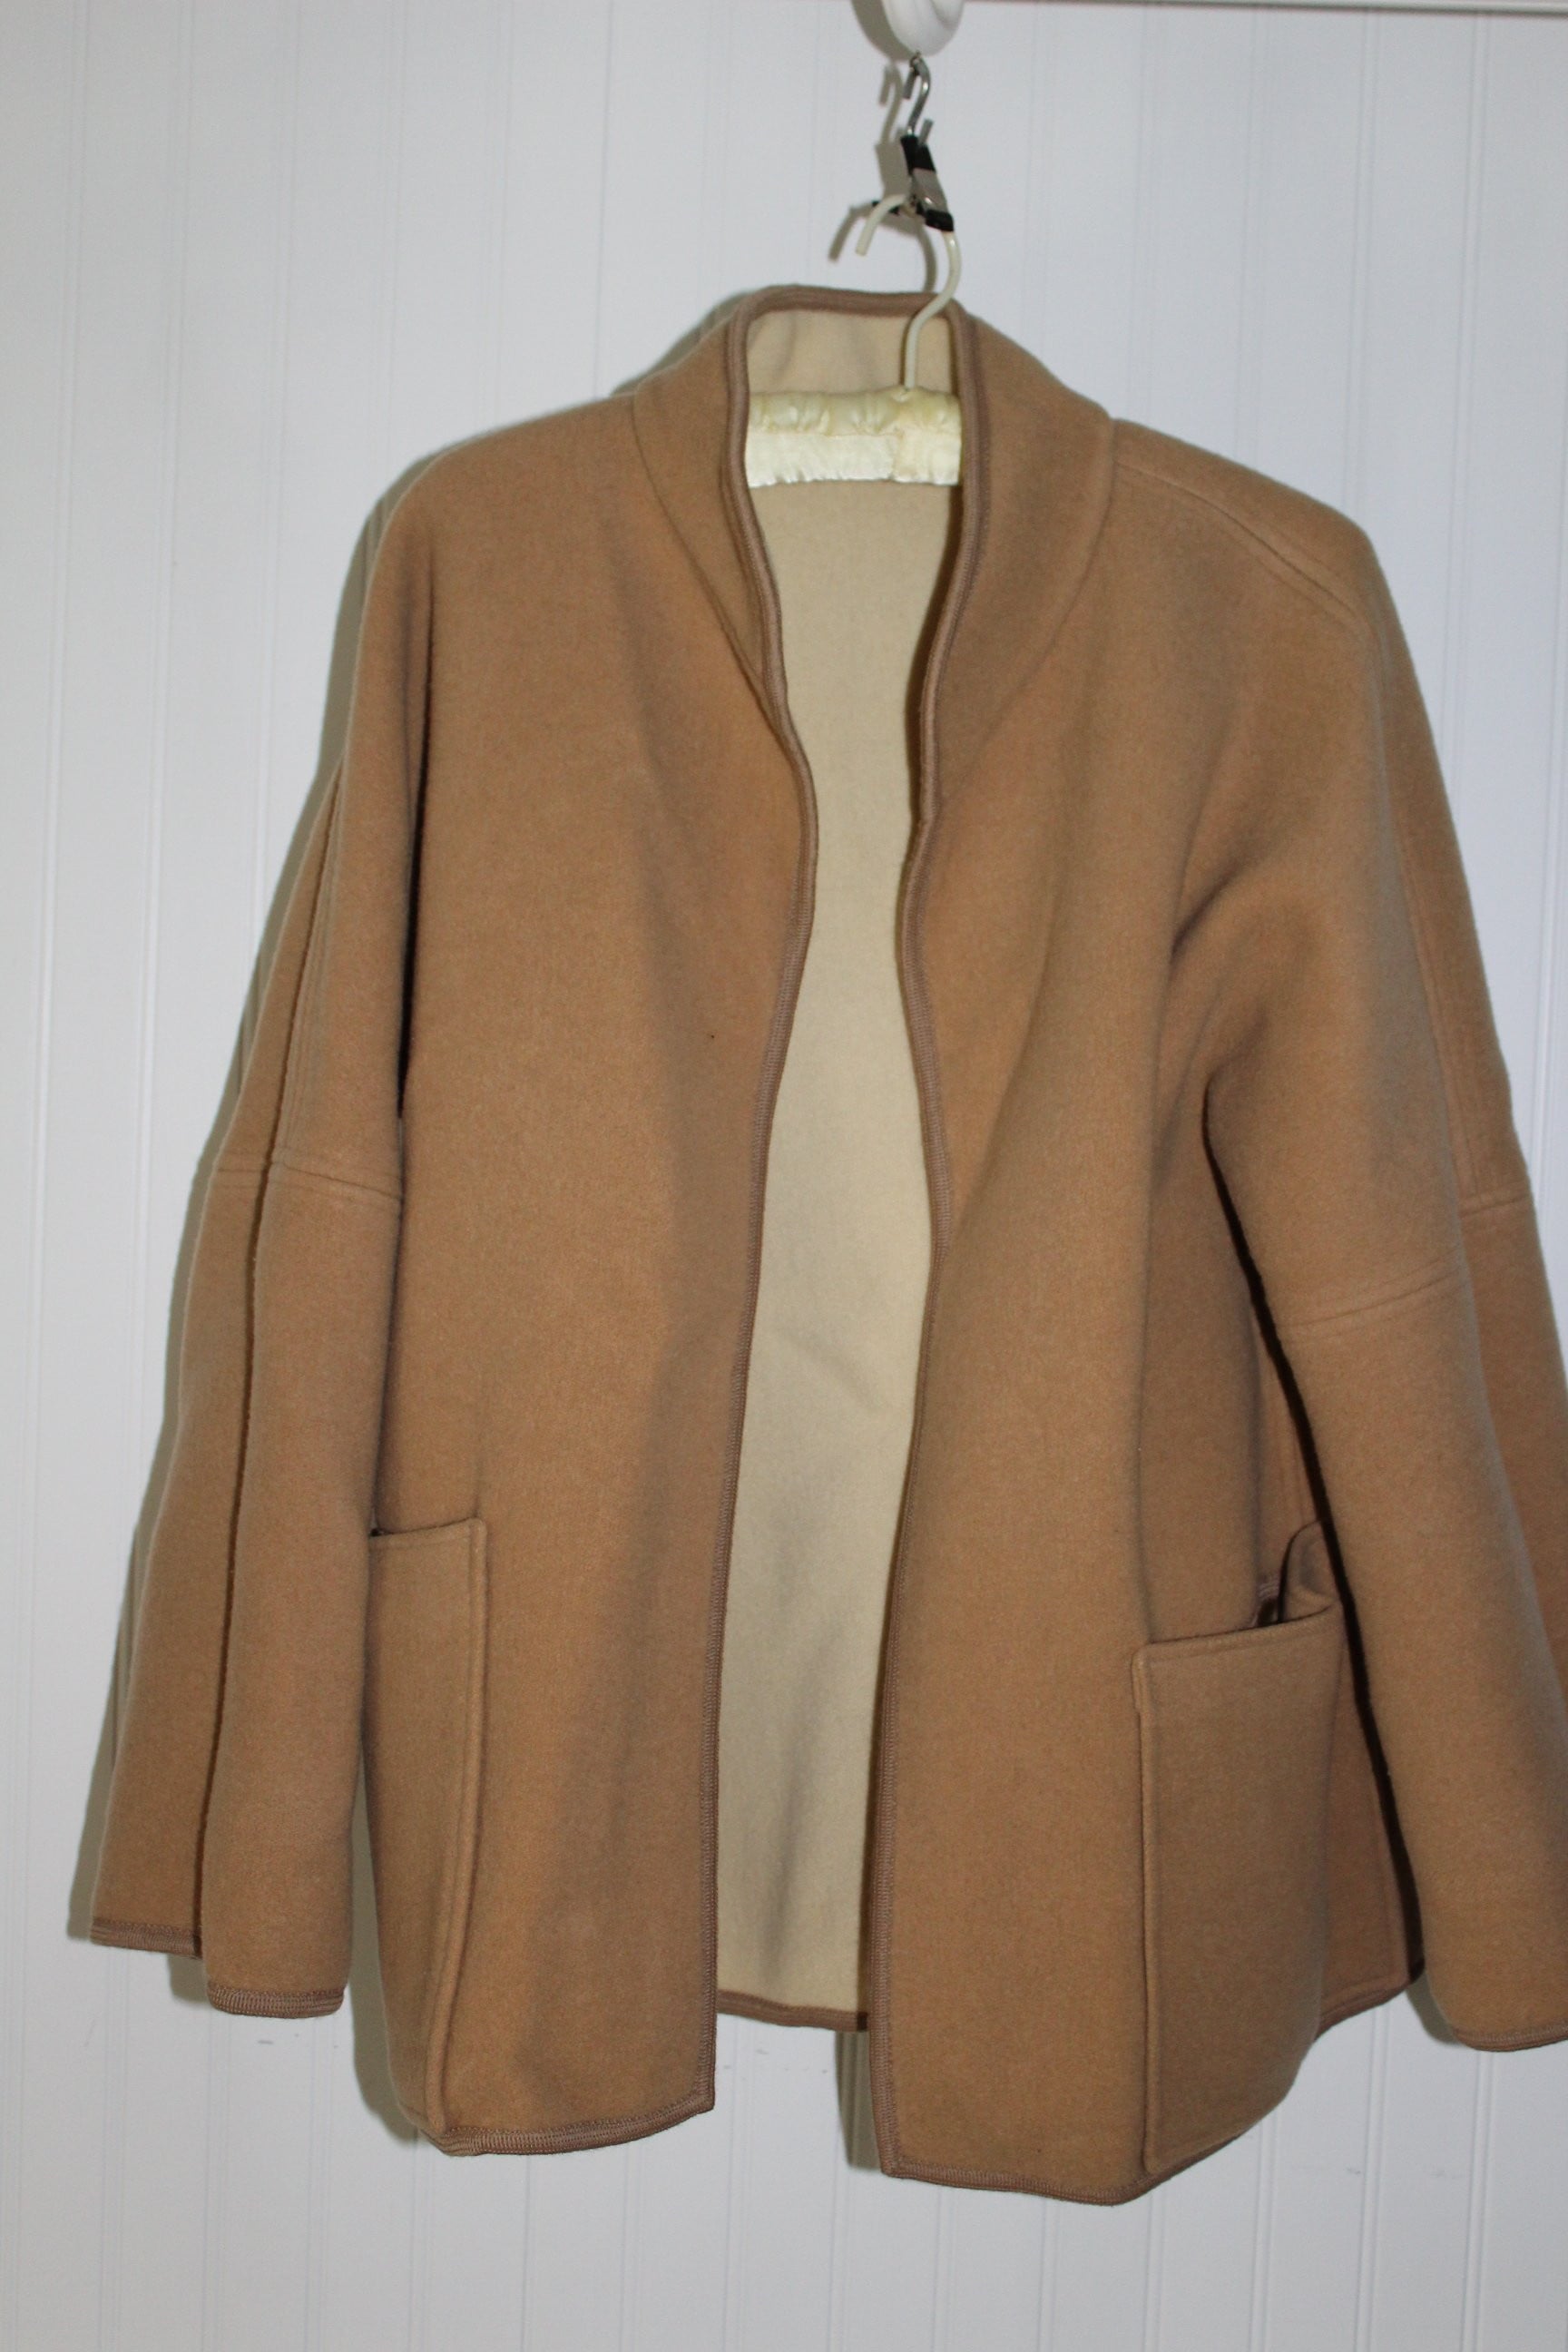 Cuddlecoat Turnaround Jacket Reversible Wool Cream Tan Medium Fits like Large unusual